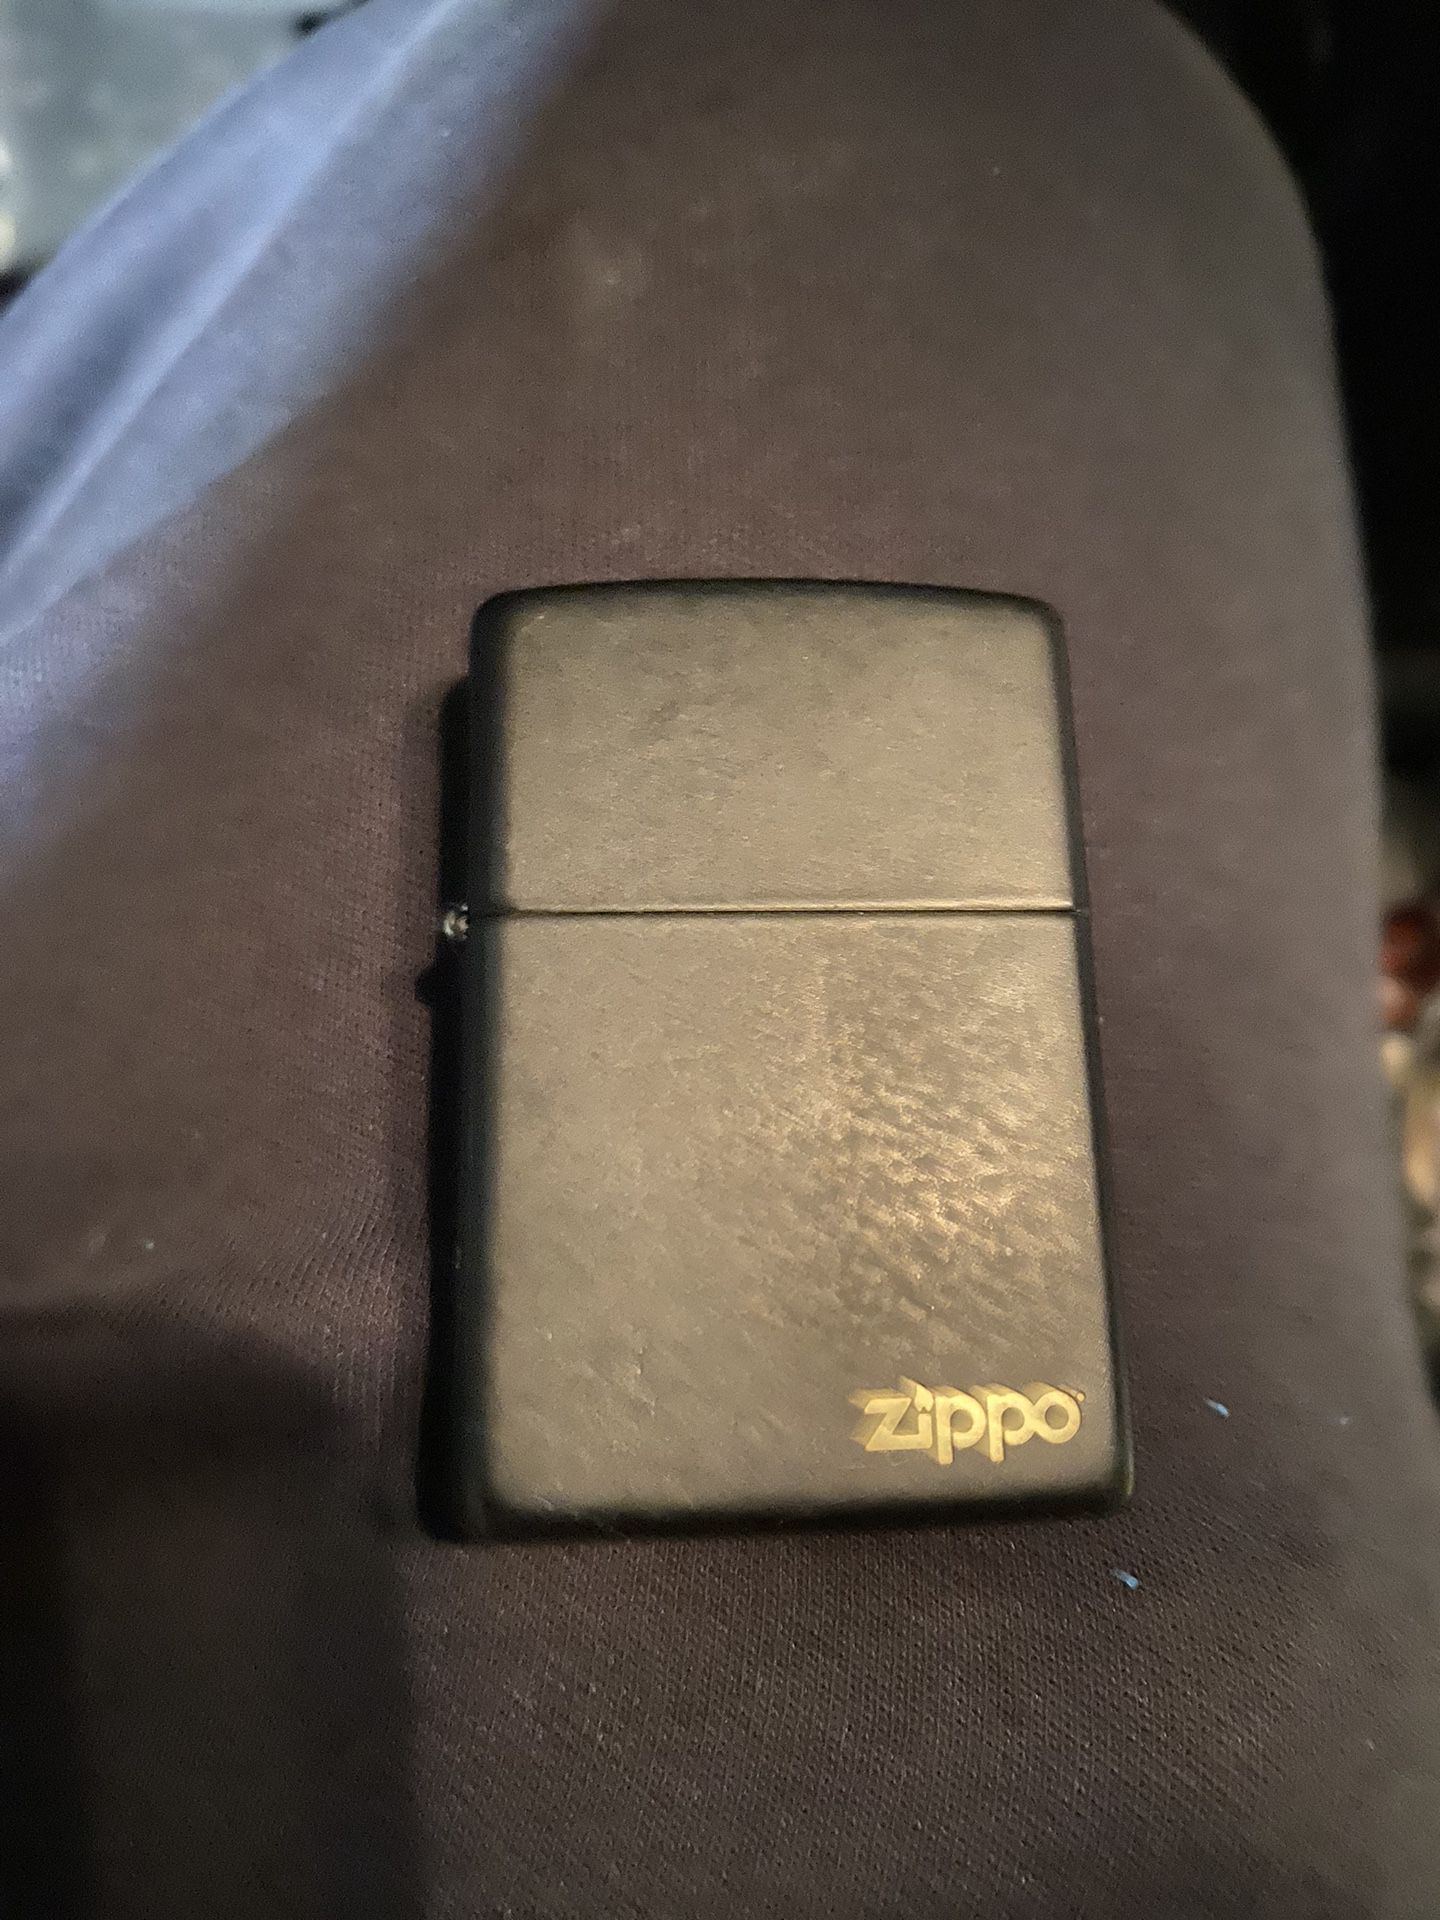  Zippo Black Lighter Works Great 